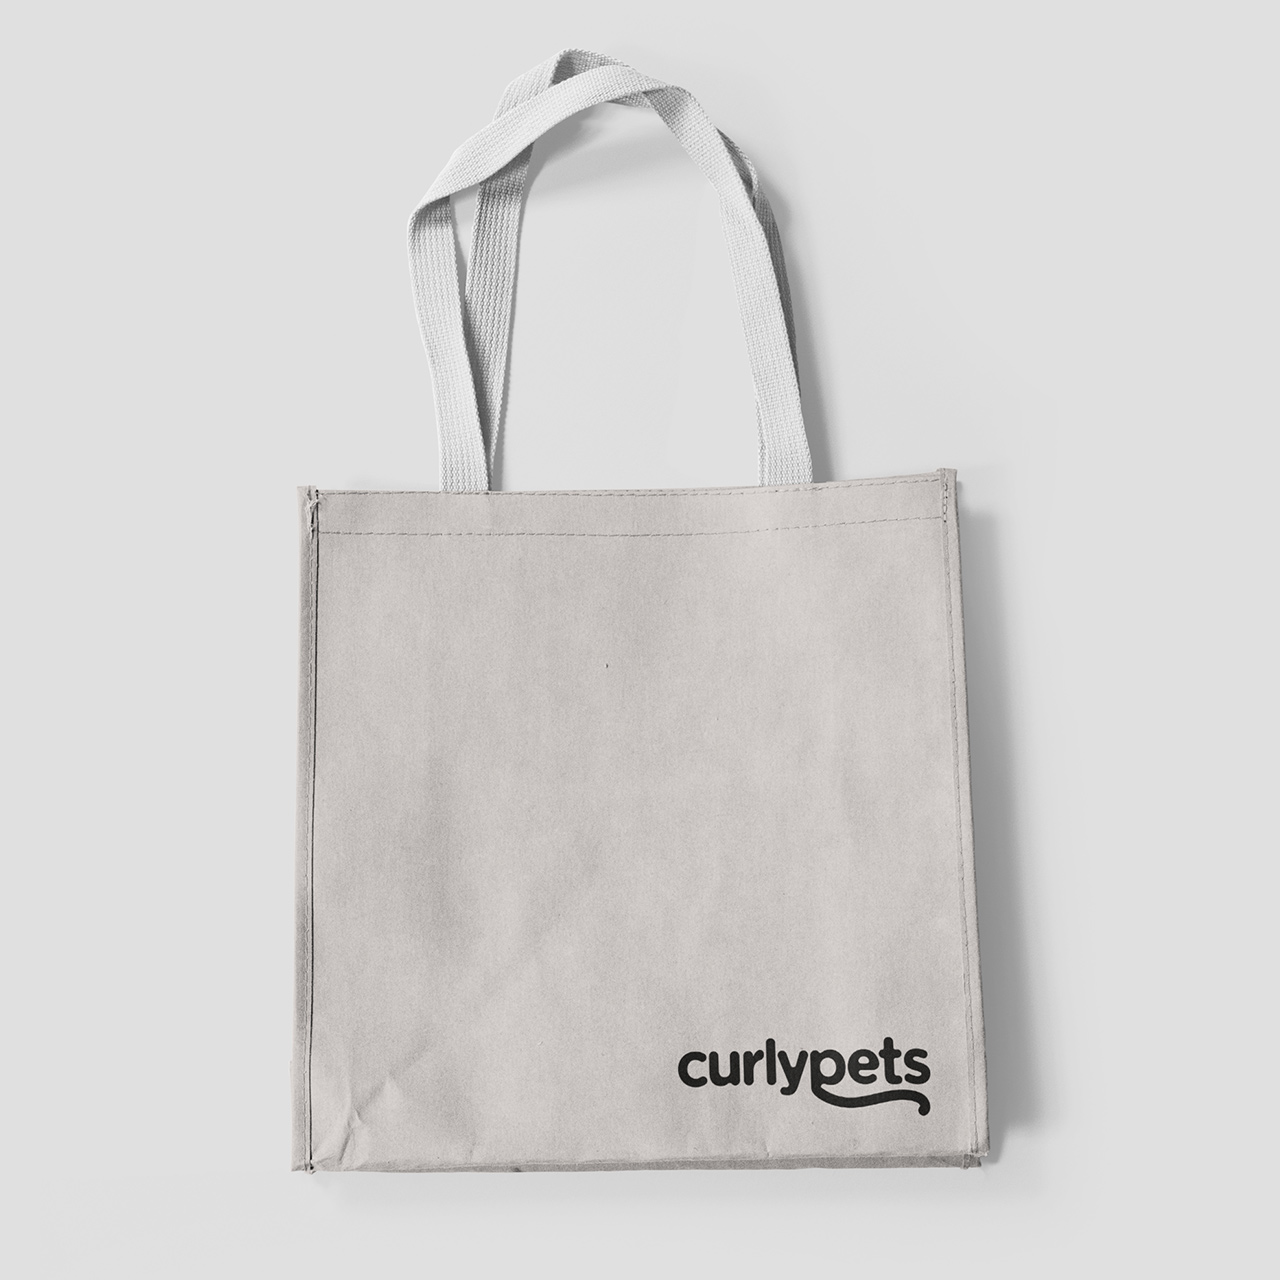 Curlypets-Bag-1280